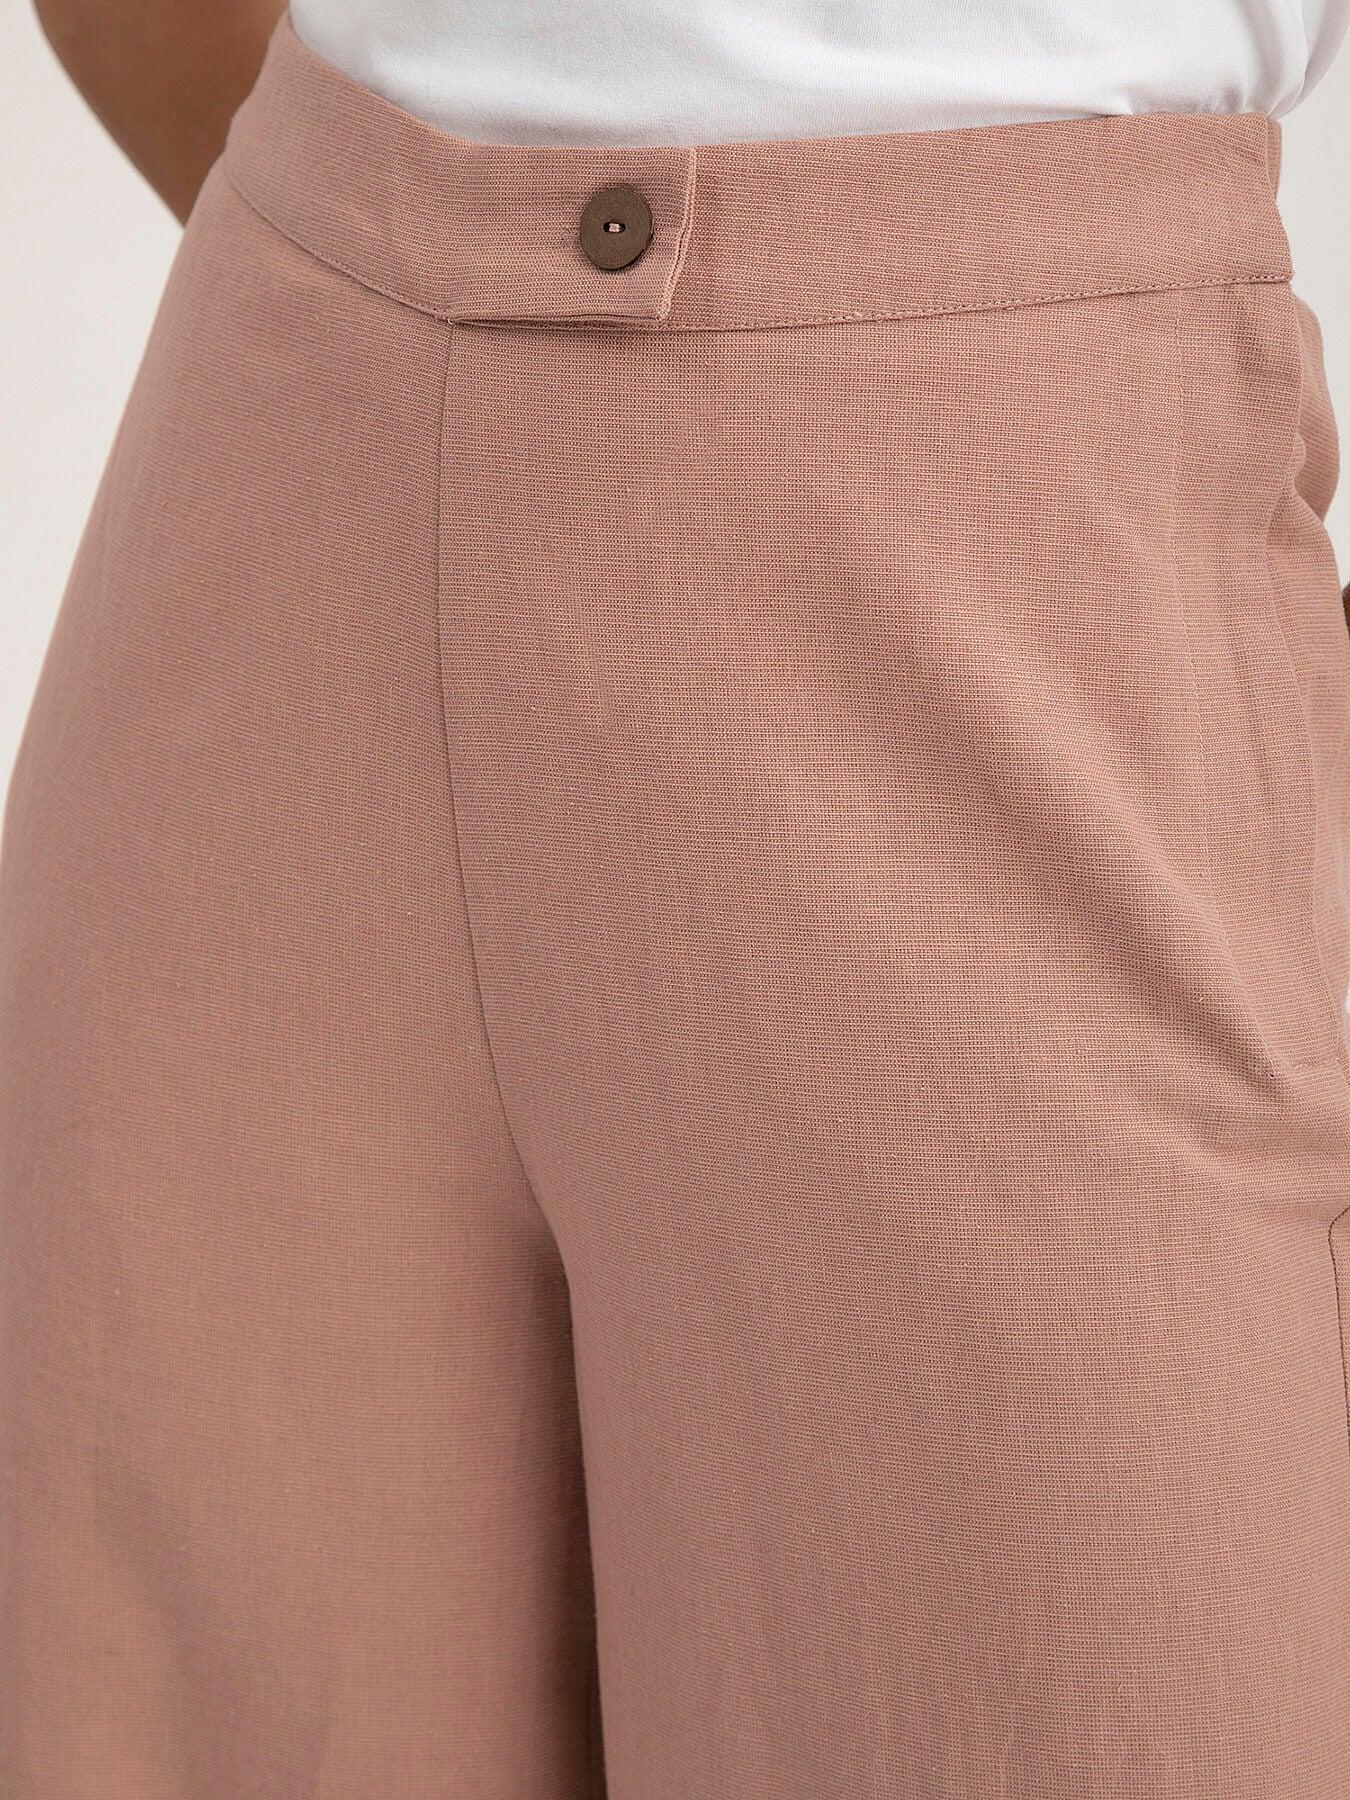 Linen Elasticated Wide Leg Trouser - Dusty Pink| Formal Trousers